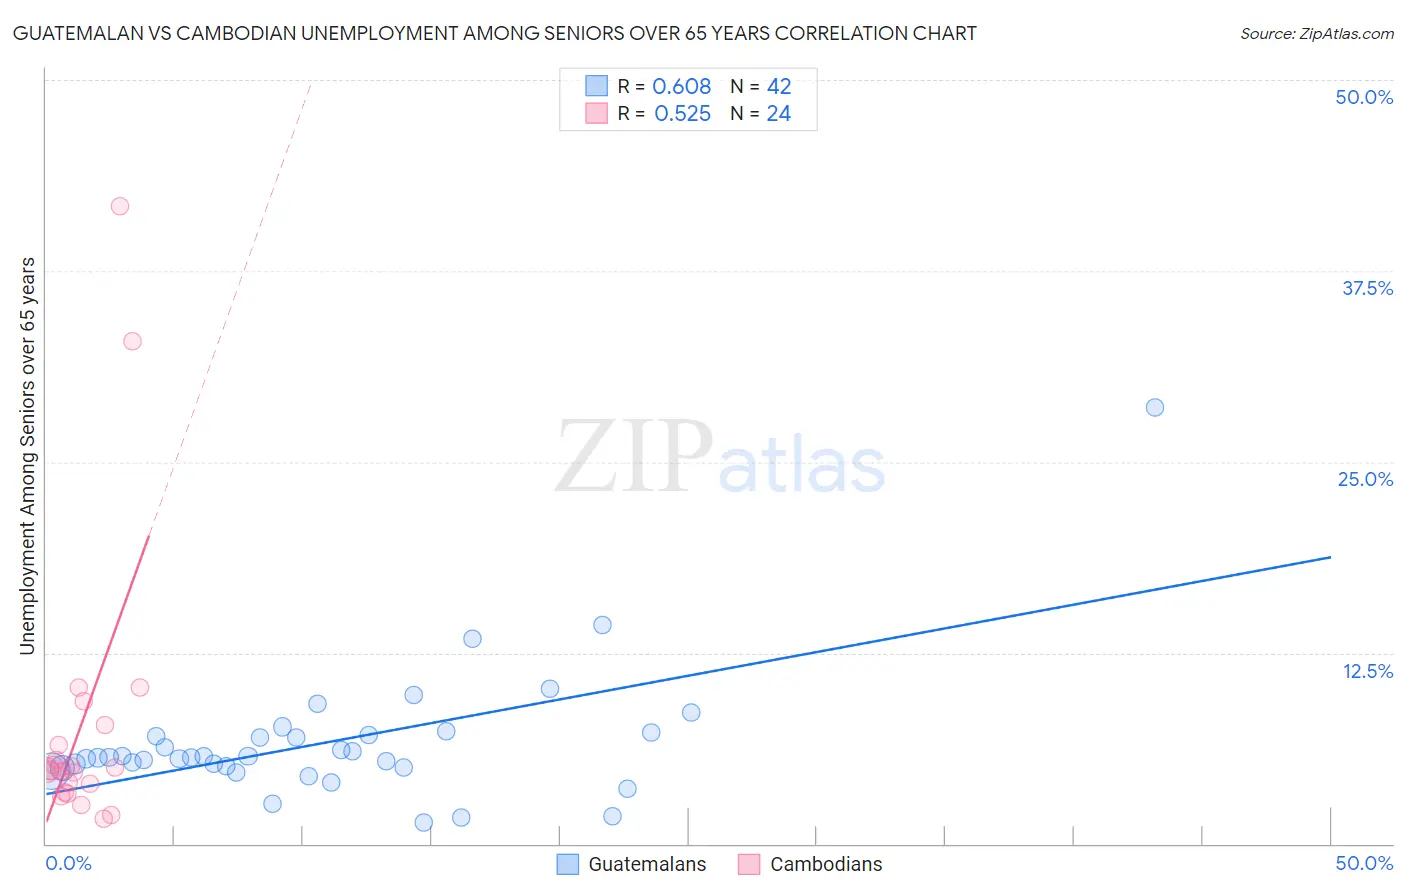 Guatemalan vs Cambodian Unemployment Among Seniors over 65 years